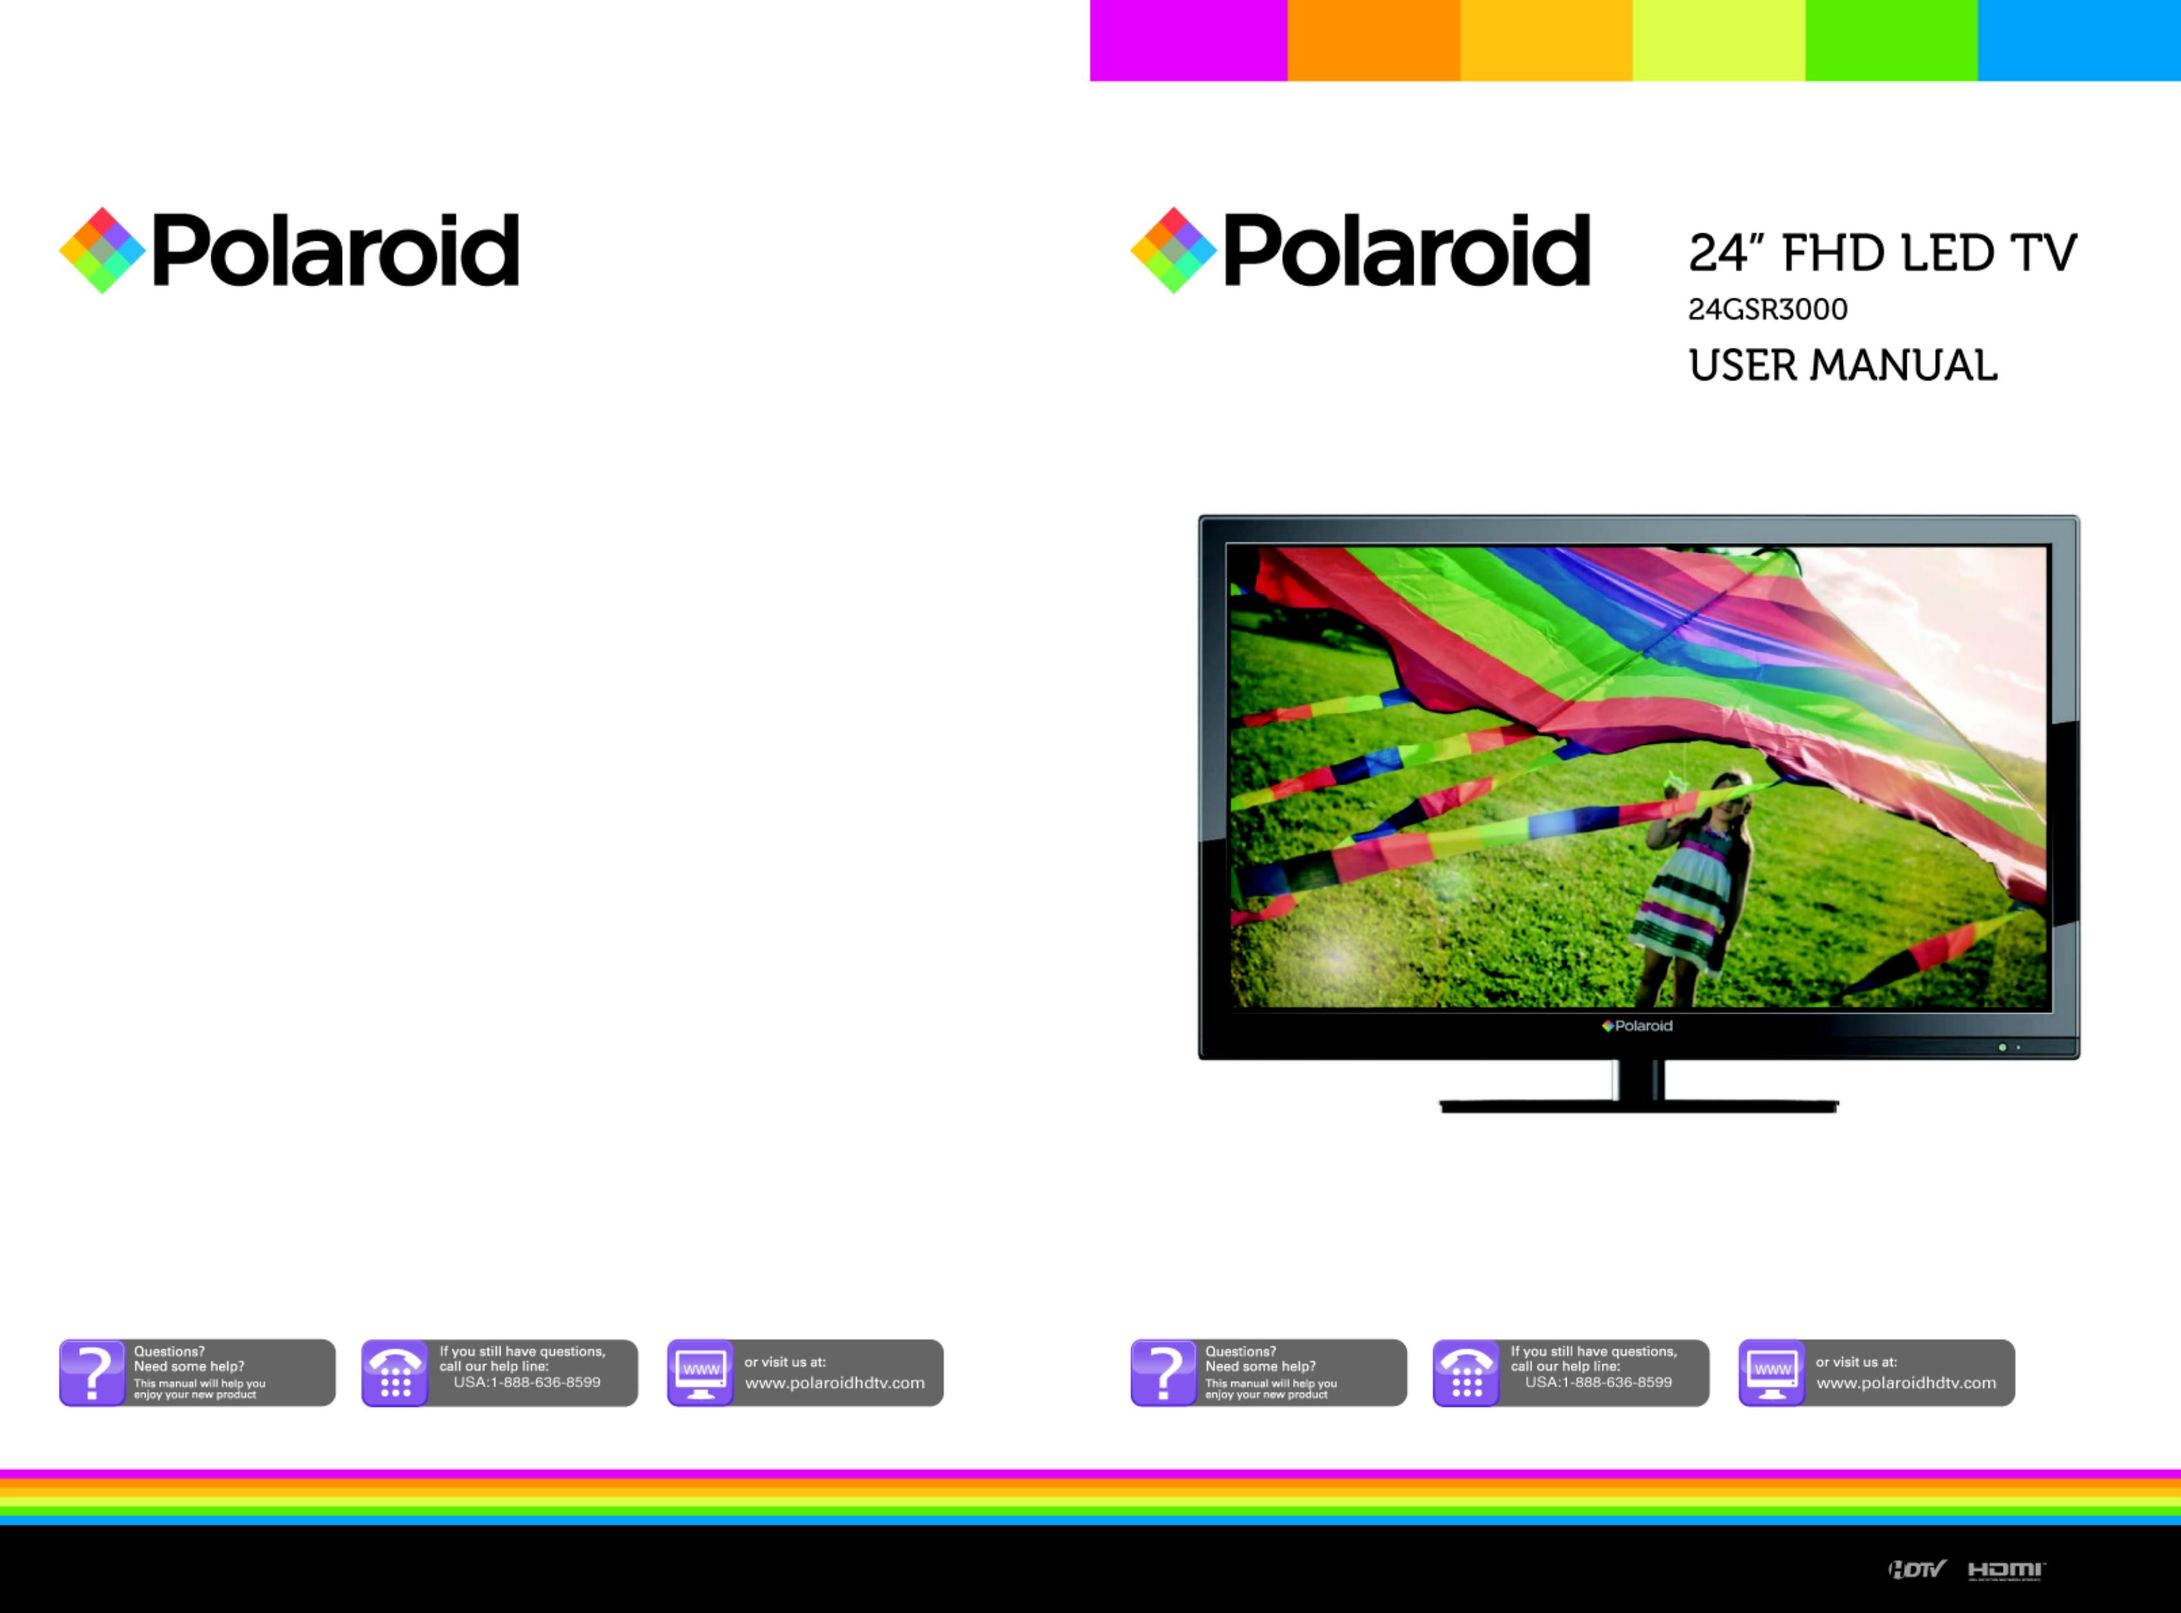 Polaroid 24" FHD LED TV Flat Panel Television User Manual